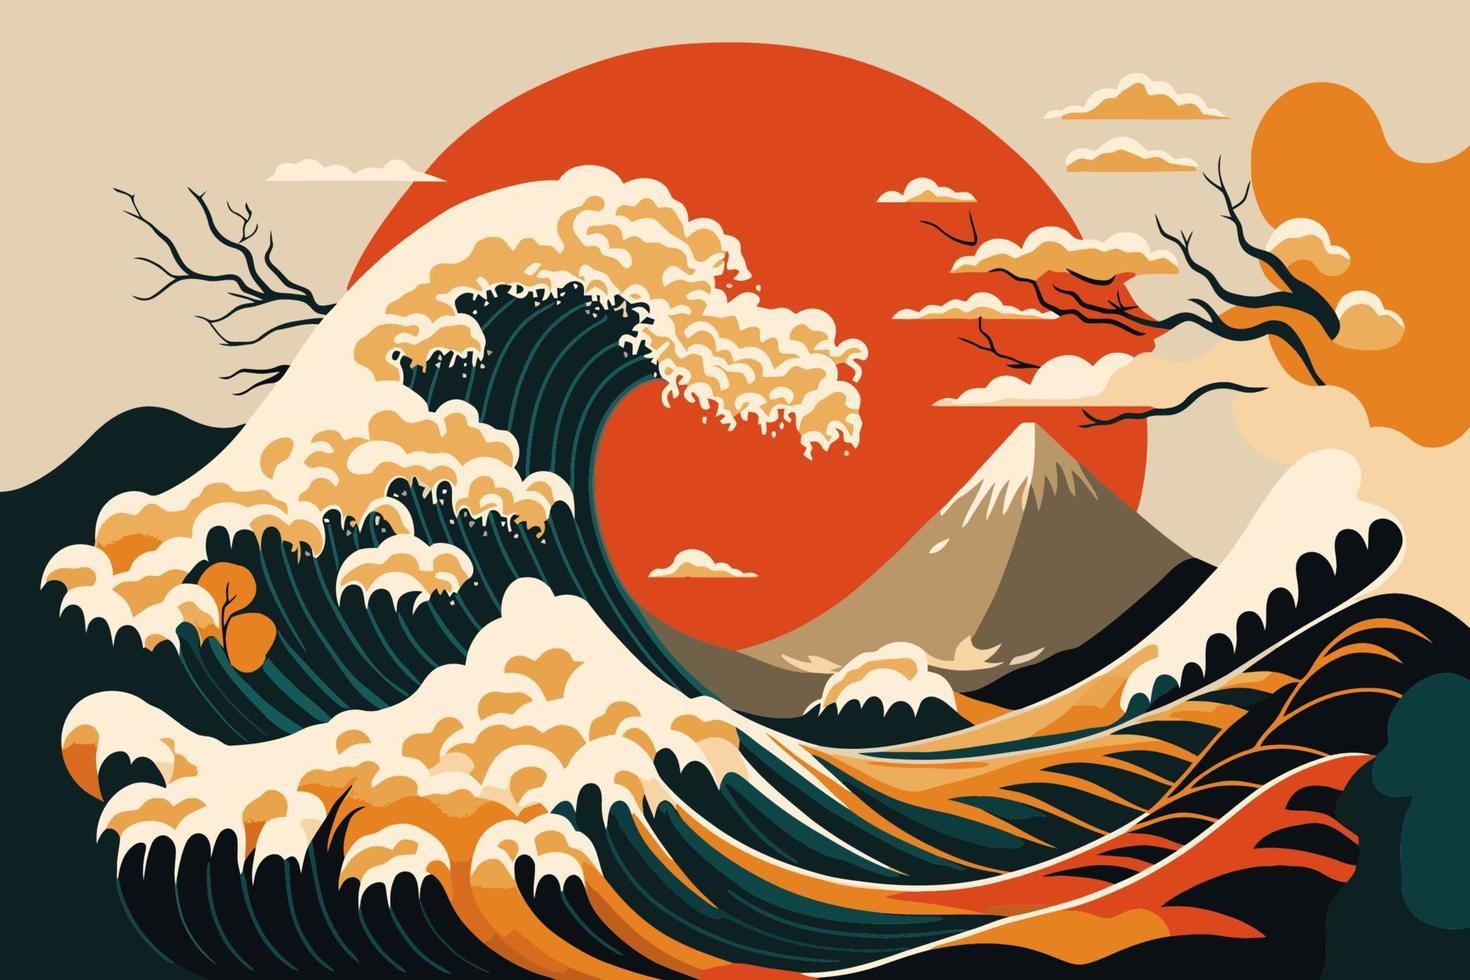 große Meereswelle mit Sonnenplakat in der Vektorillustration im japanischen Stil vektor